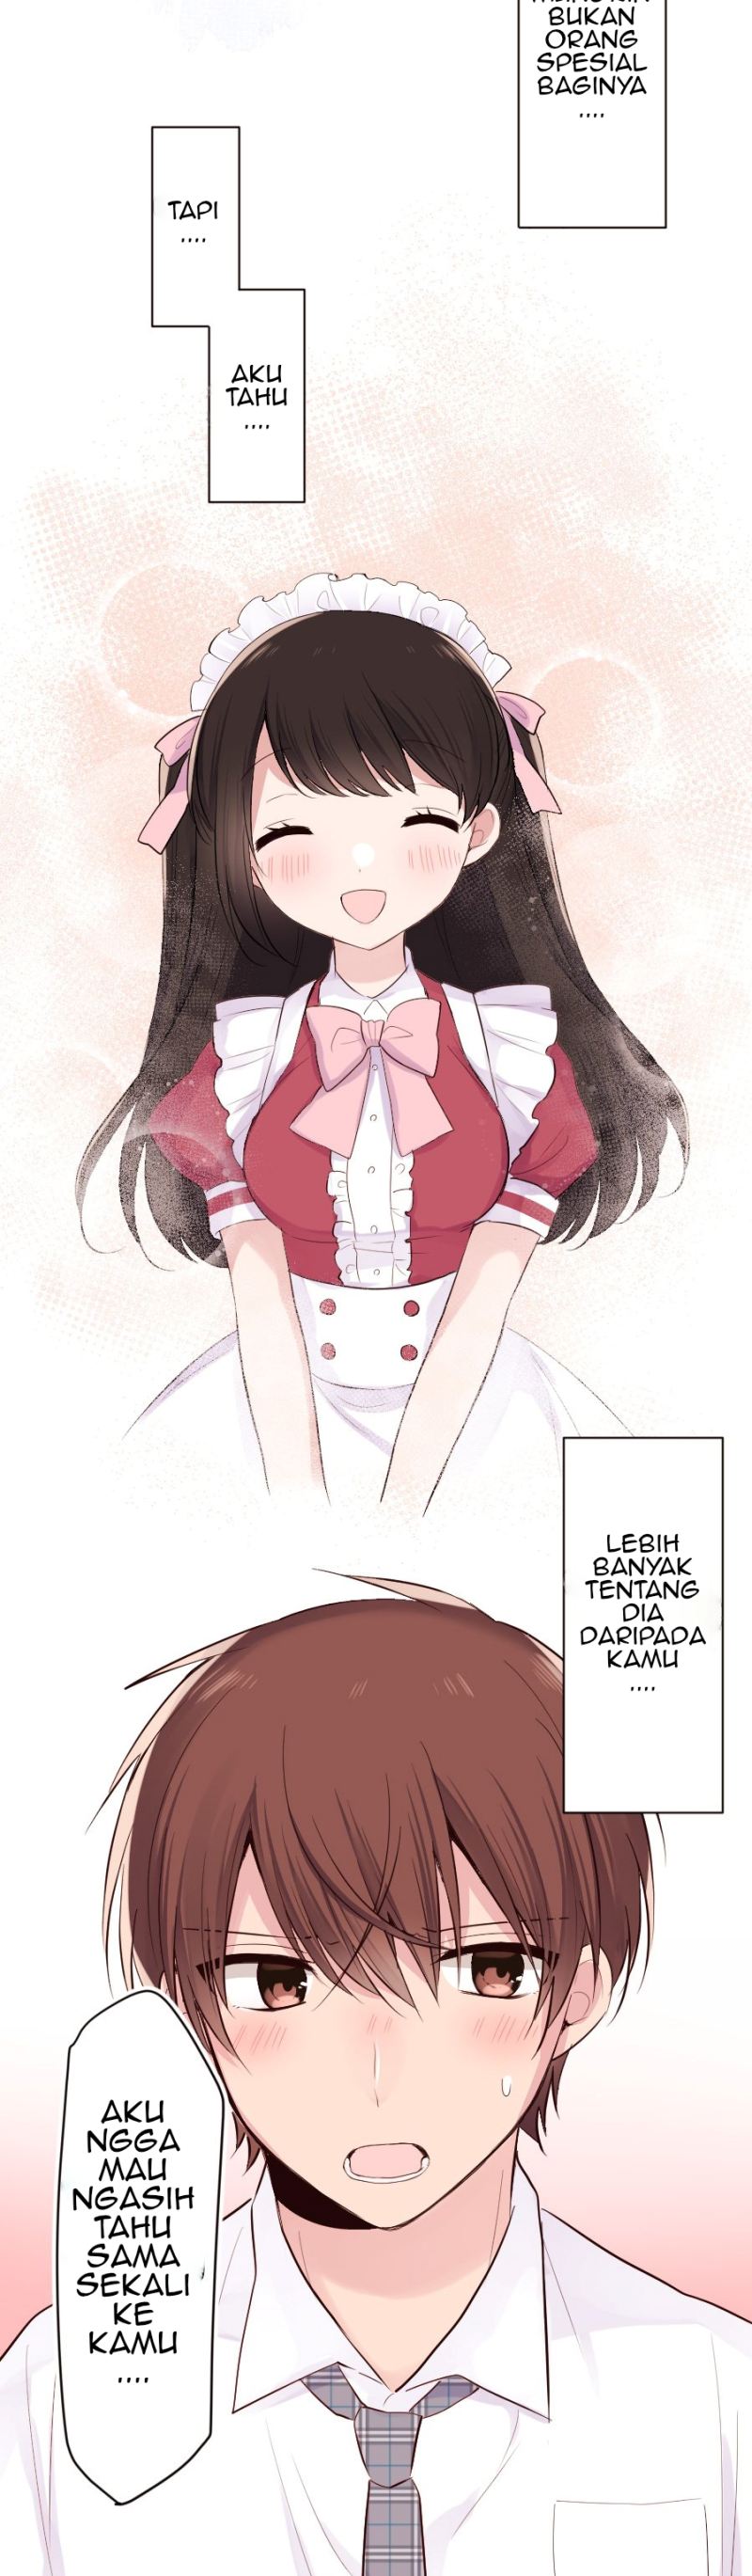 Class Maid (shimamura) Chapter 29